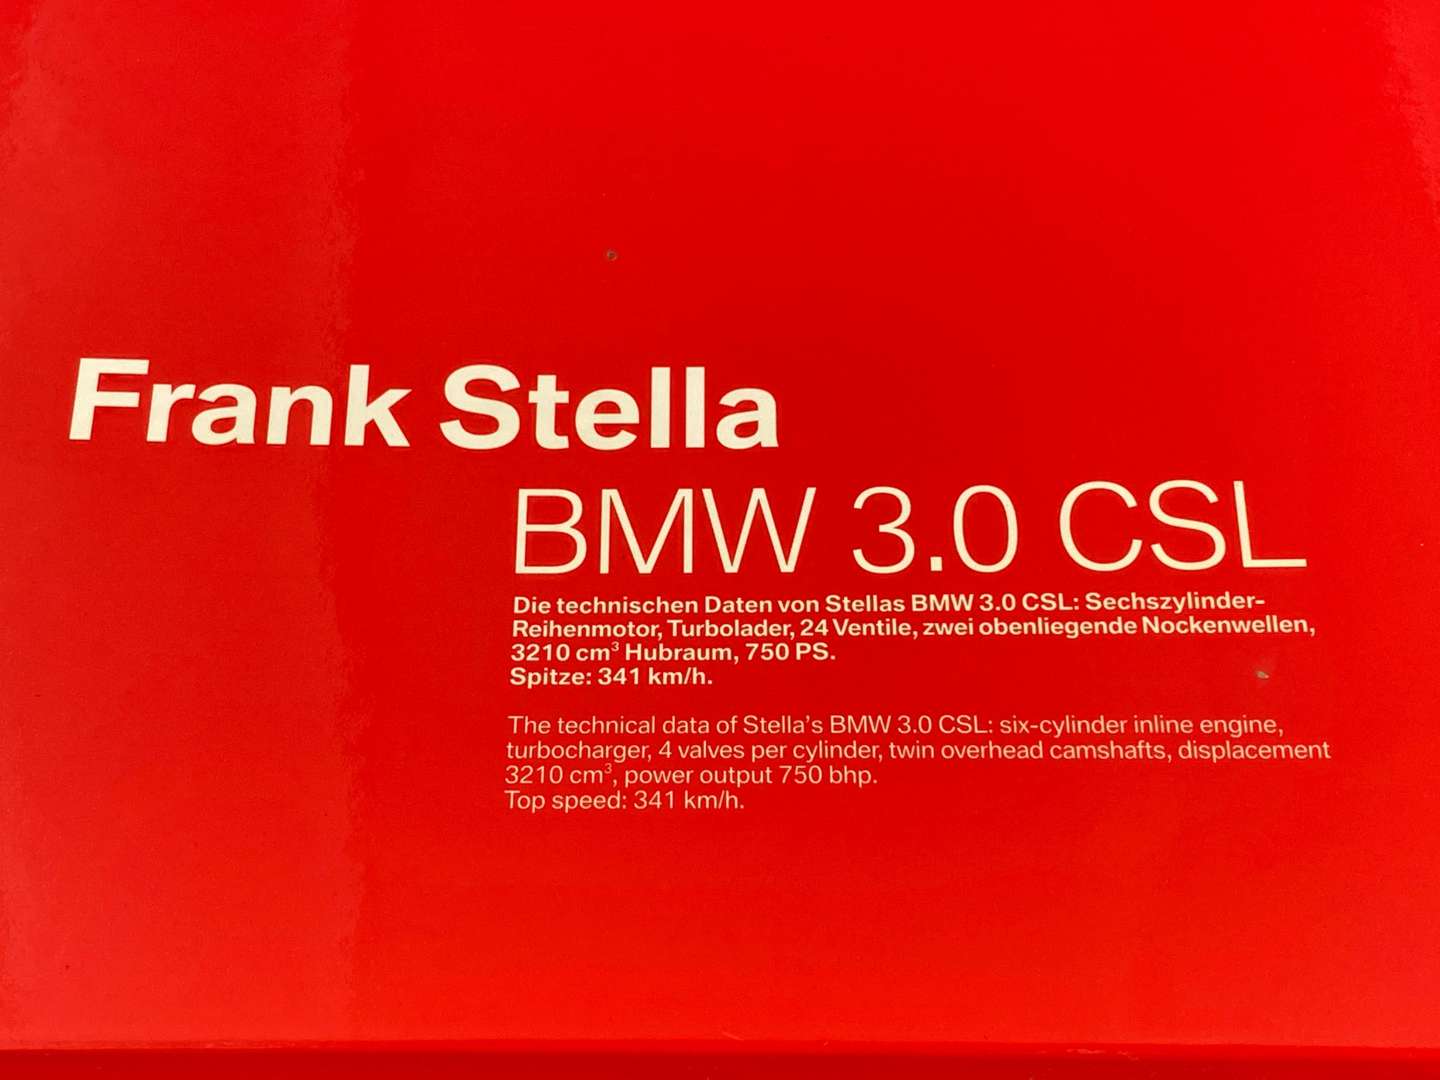 <p>FRANK STELLA, BMW 3.0 CSL&nbsp;</p>